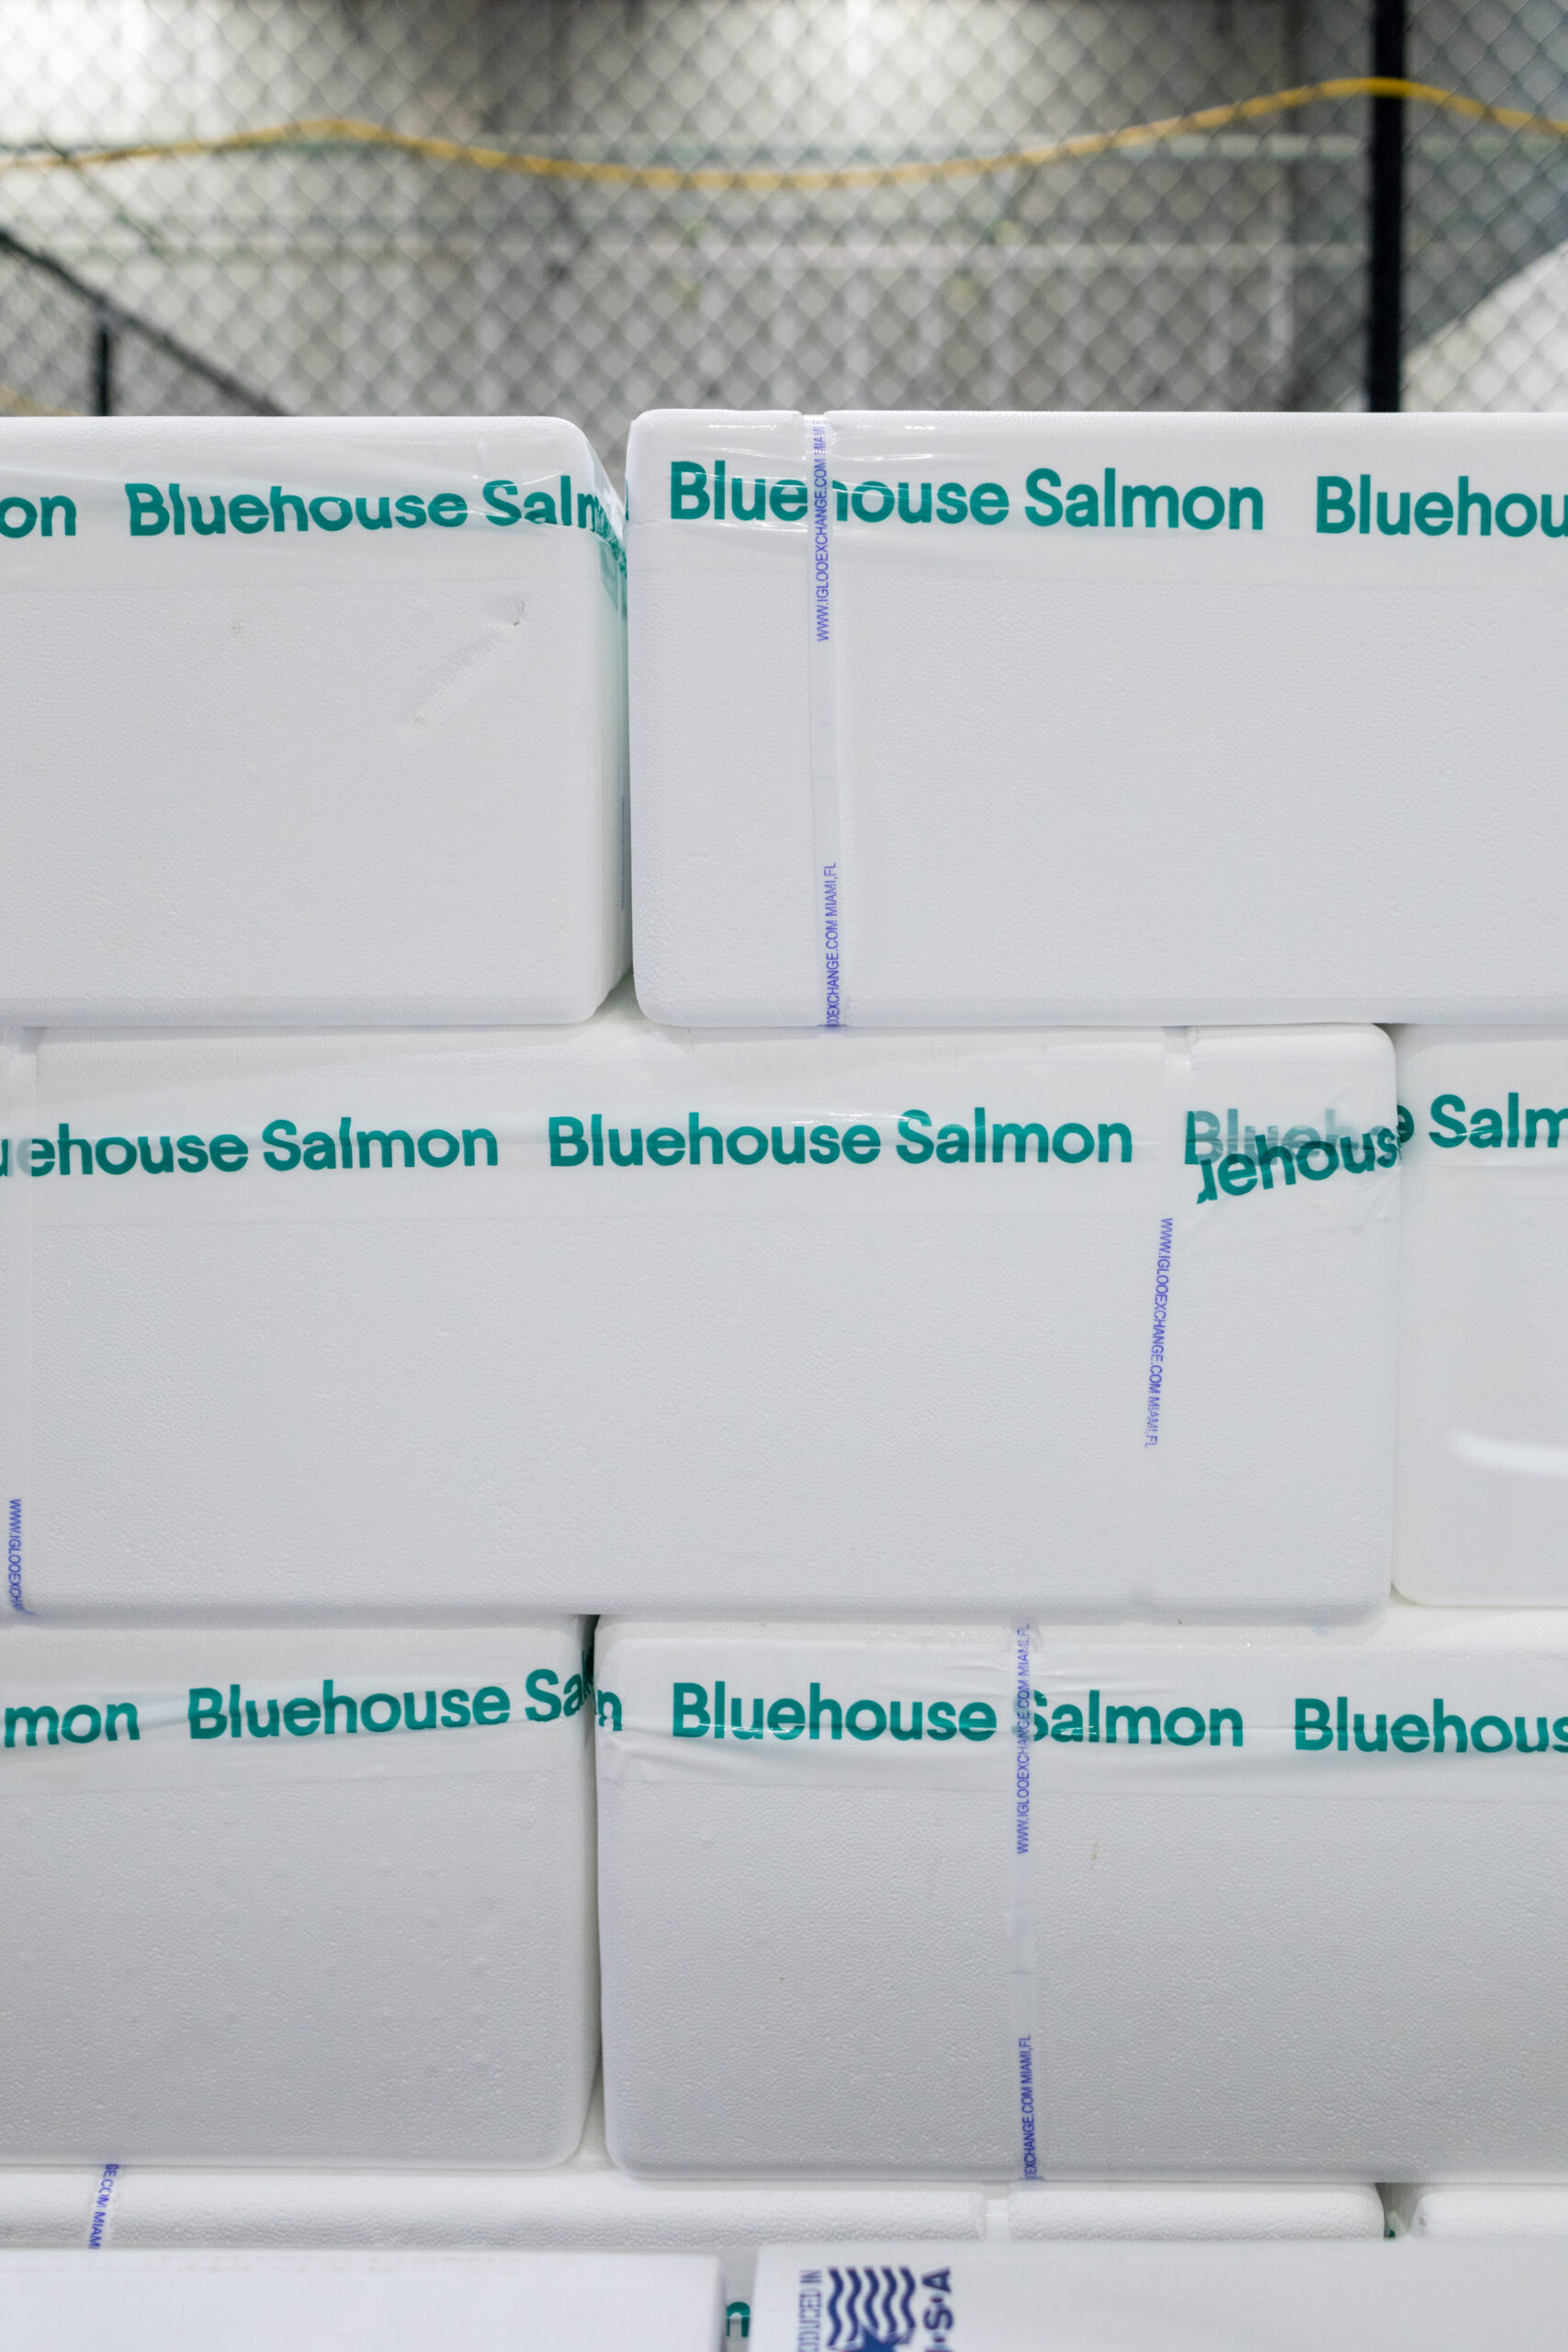 Bluehouse Salmon